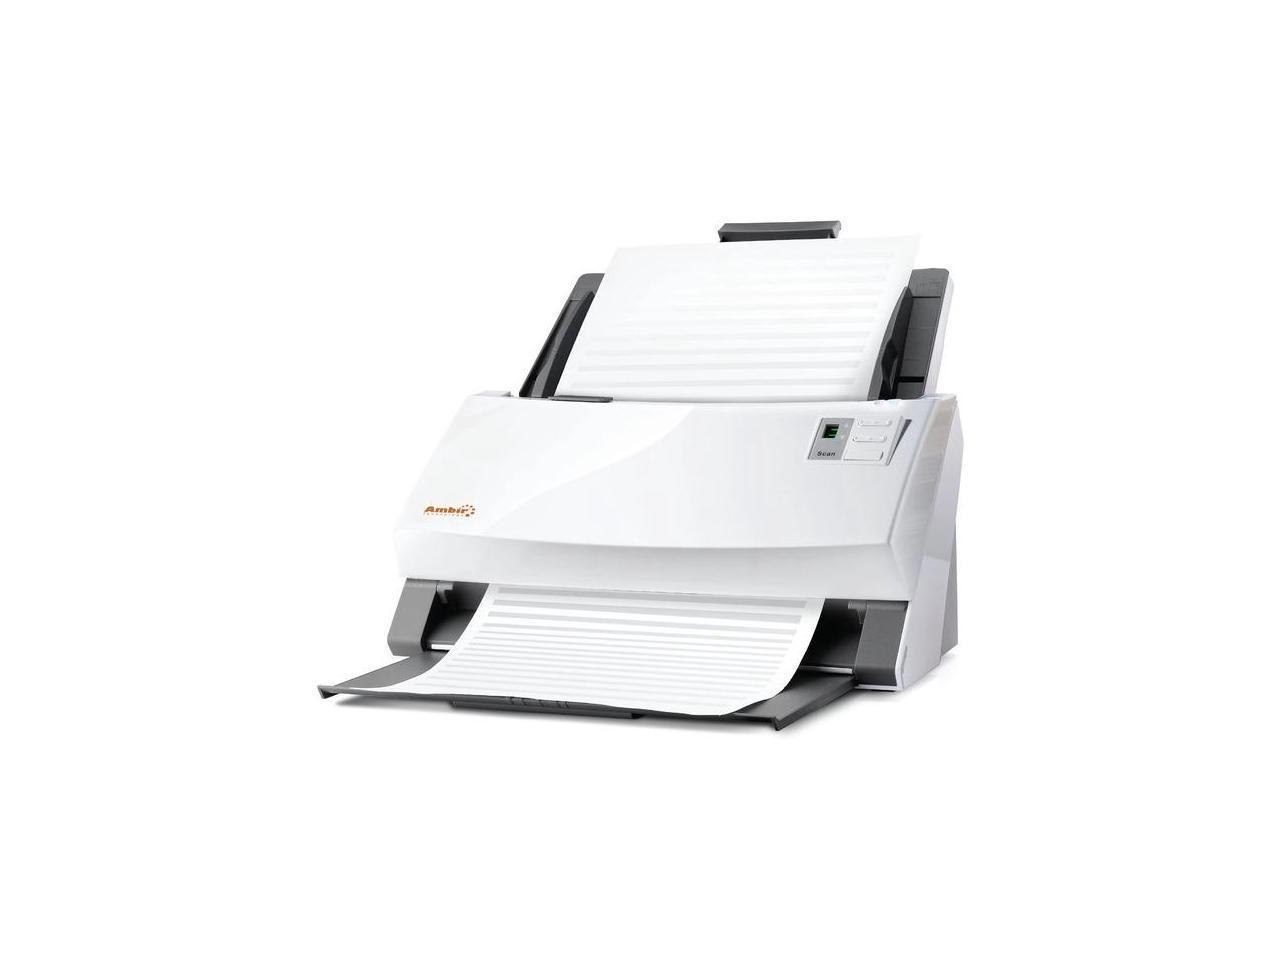 Ambir Technology Ambir ImageScan Pro 340U Sheetfed Scanner - Duplex Scanning